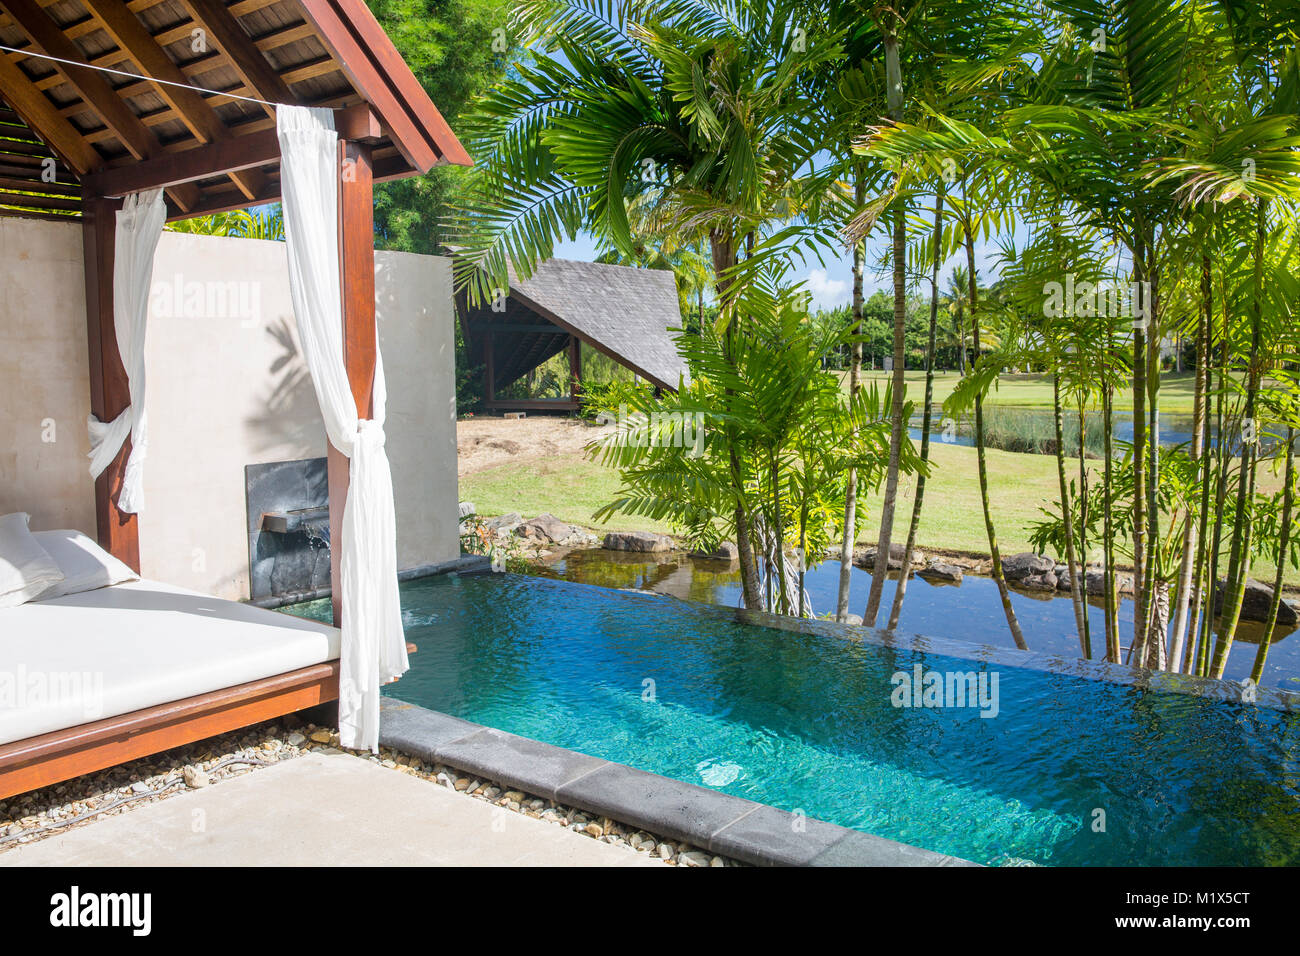 Niramaya villas and spa resort with plunge pools and cabana, Port Douglas,Queensland,Australia Stock Photo